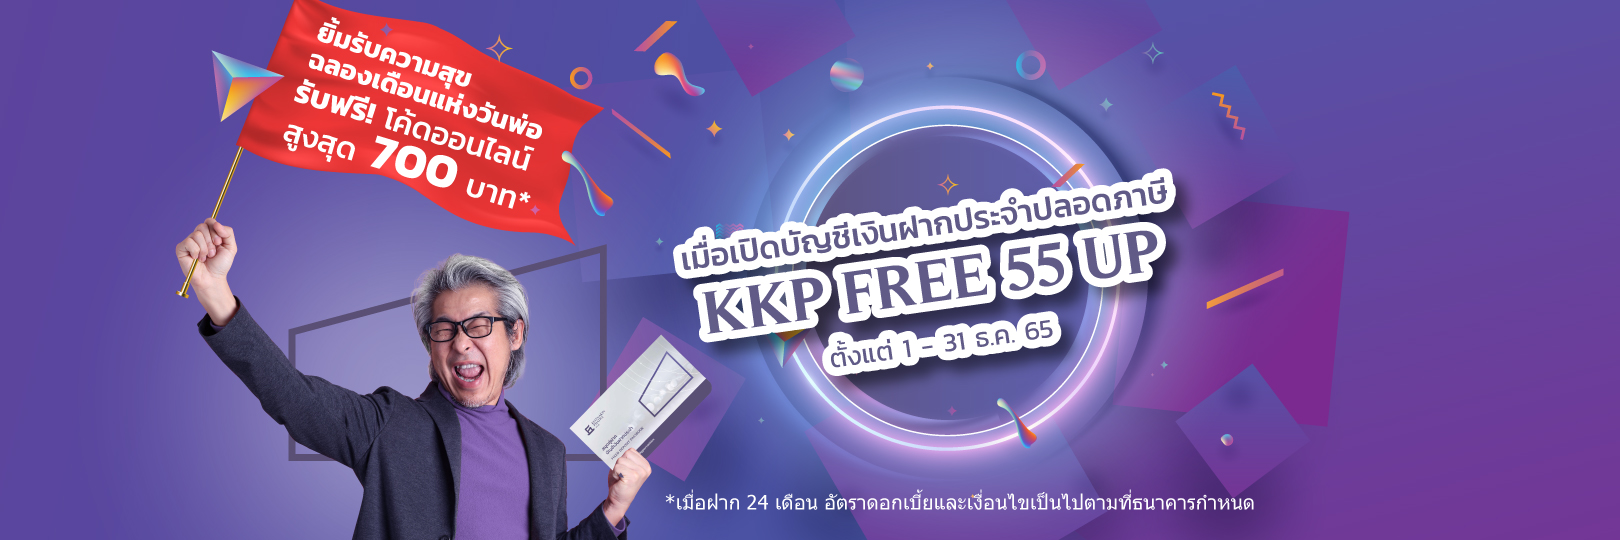  KKP FREE 55 UP-Promo_banner_1620x540